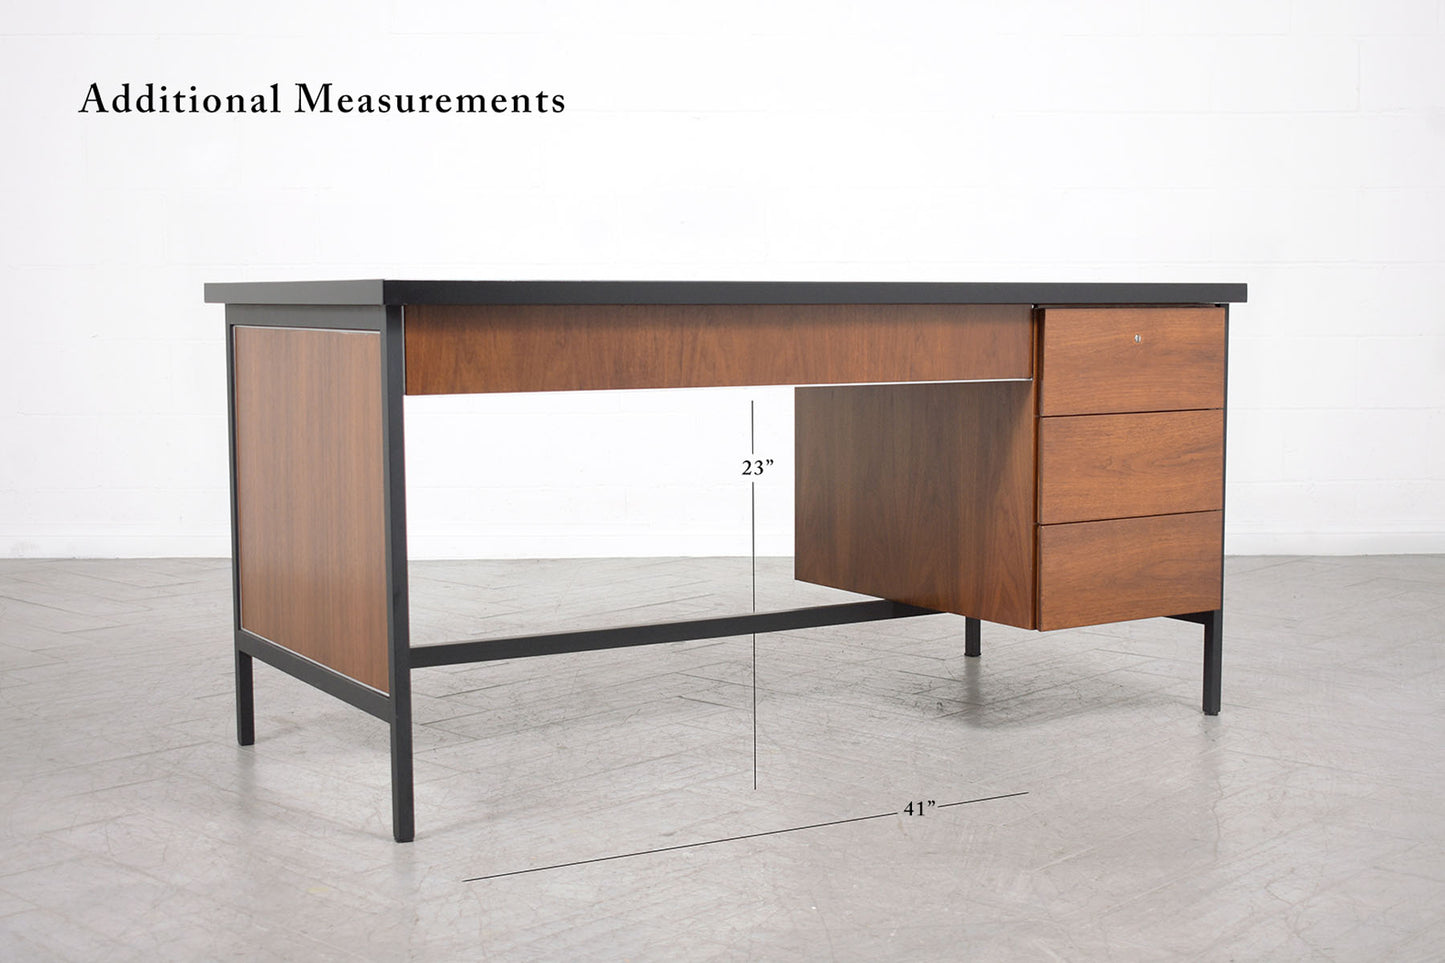 Timeless Elegance: Florence Knoll's Mid-Century Modern Executive Desk